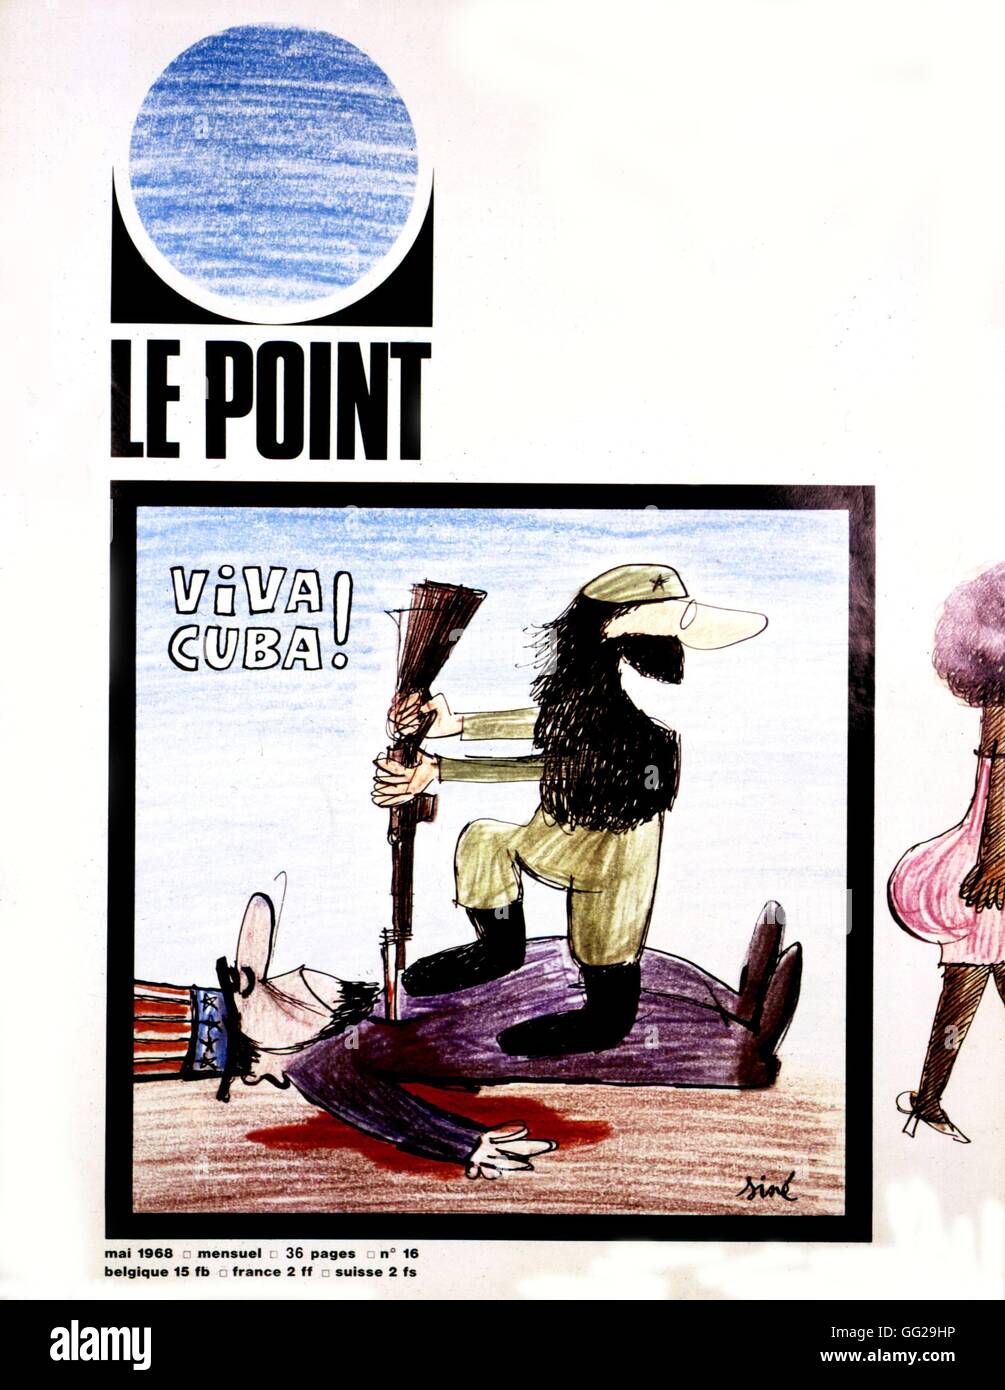 Cover of 'Le Point' magazine, satirical cartoon by Siné: 'Viva Cuba' May 1968 Cuba Stock Photo